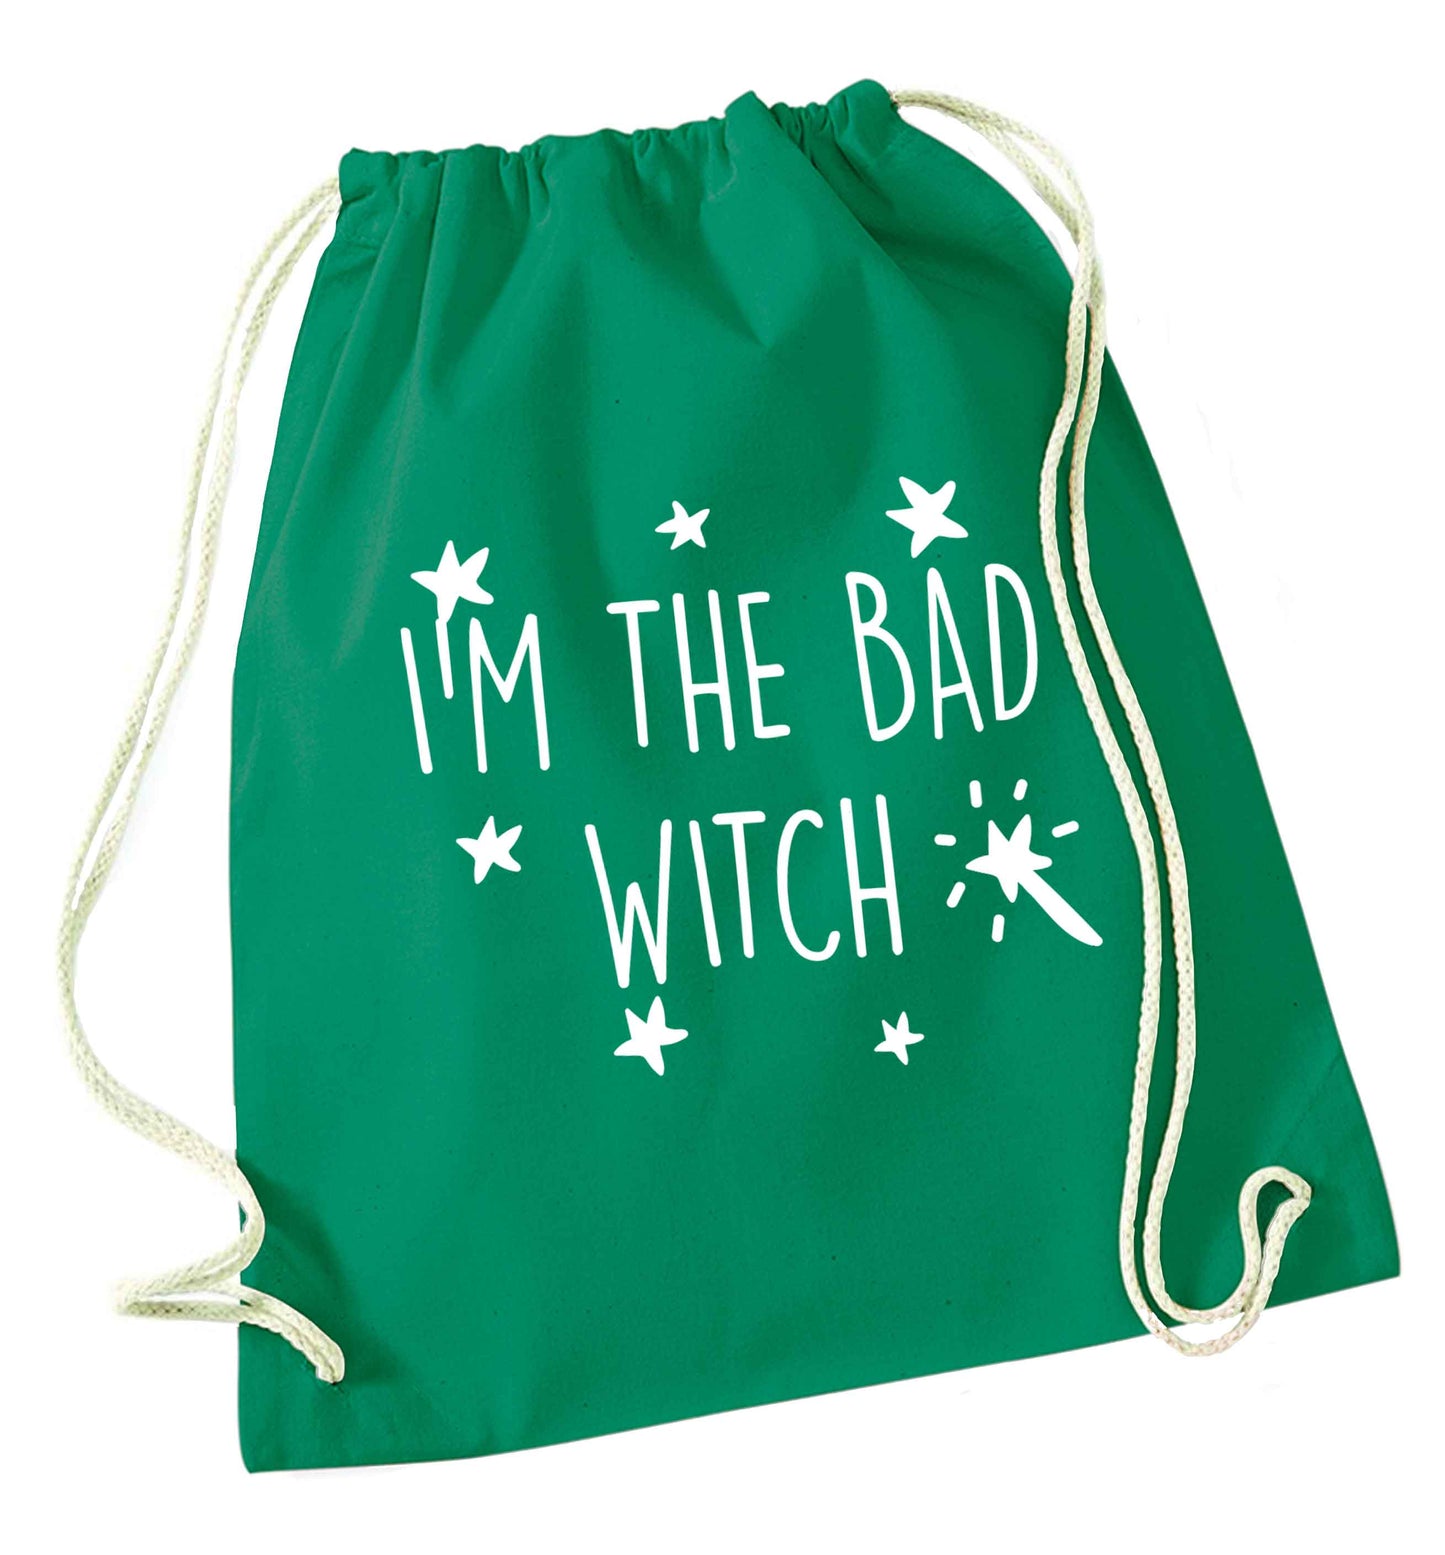 Bad witch green drawstring bag